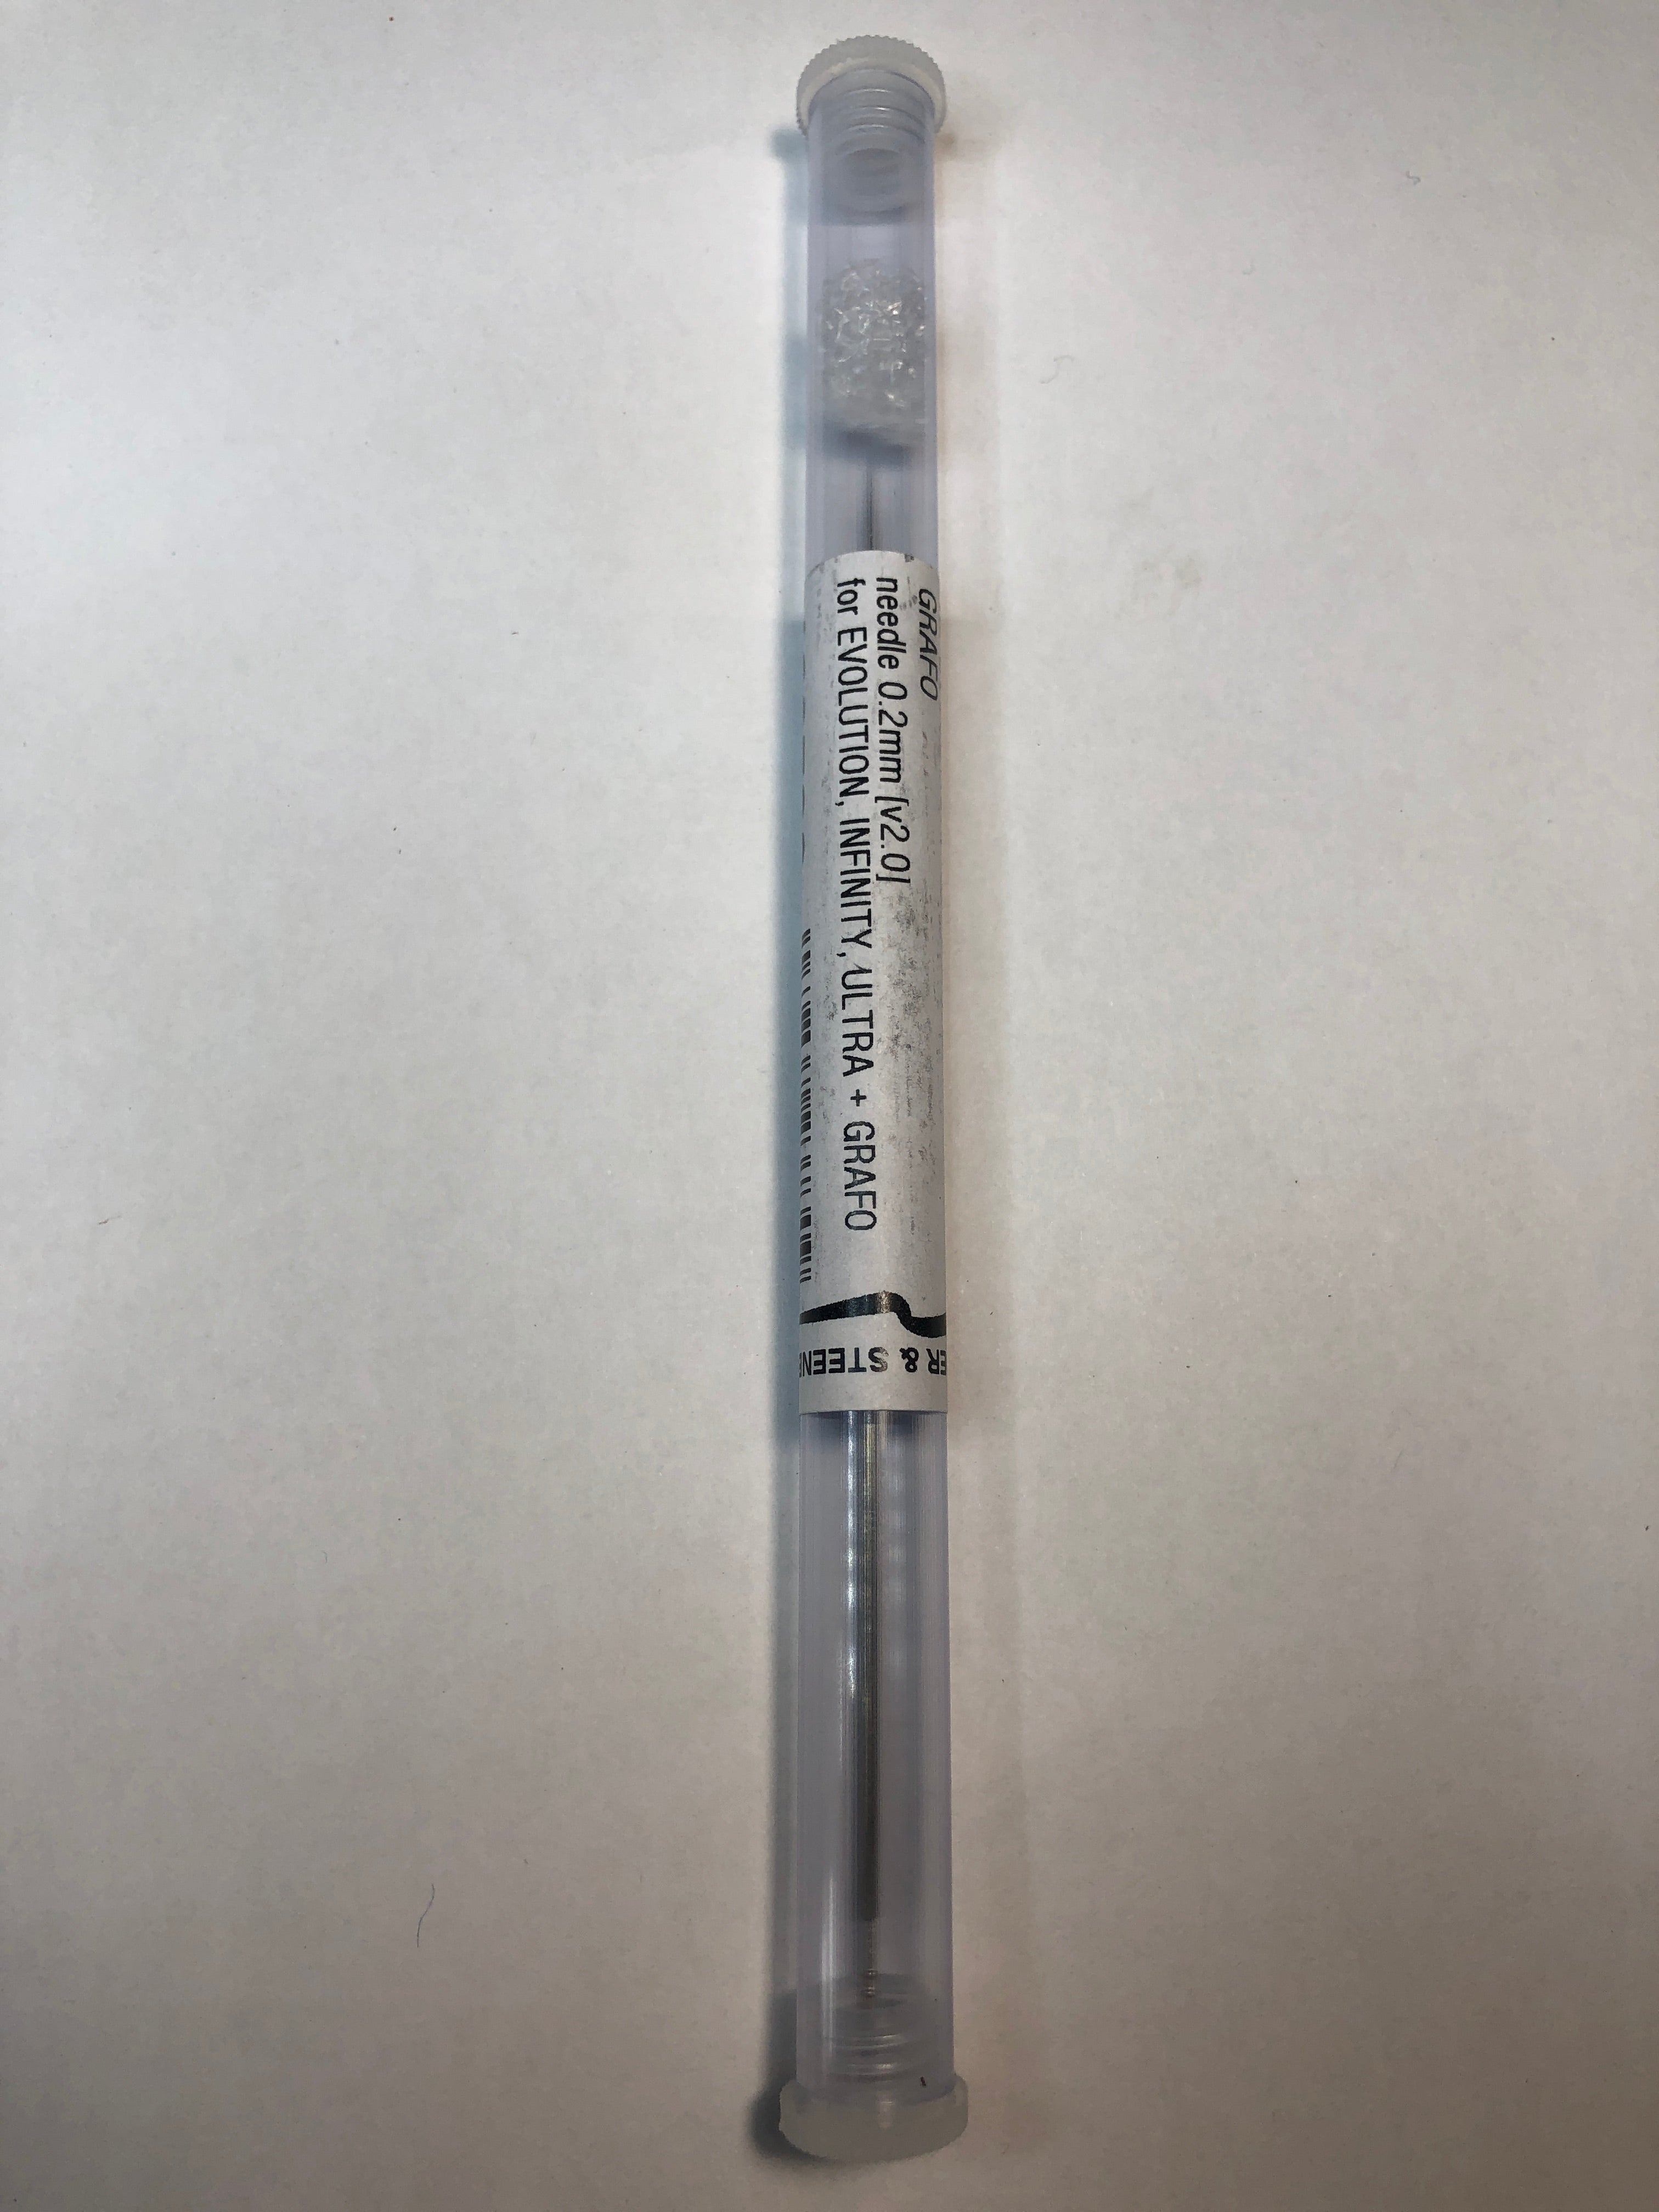 123730 Airbrush Needle 0.2 mm (v2.0) - Harder & Steenbeck